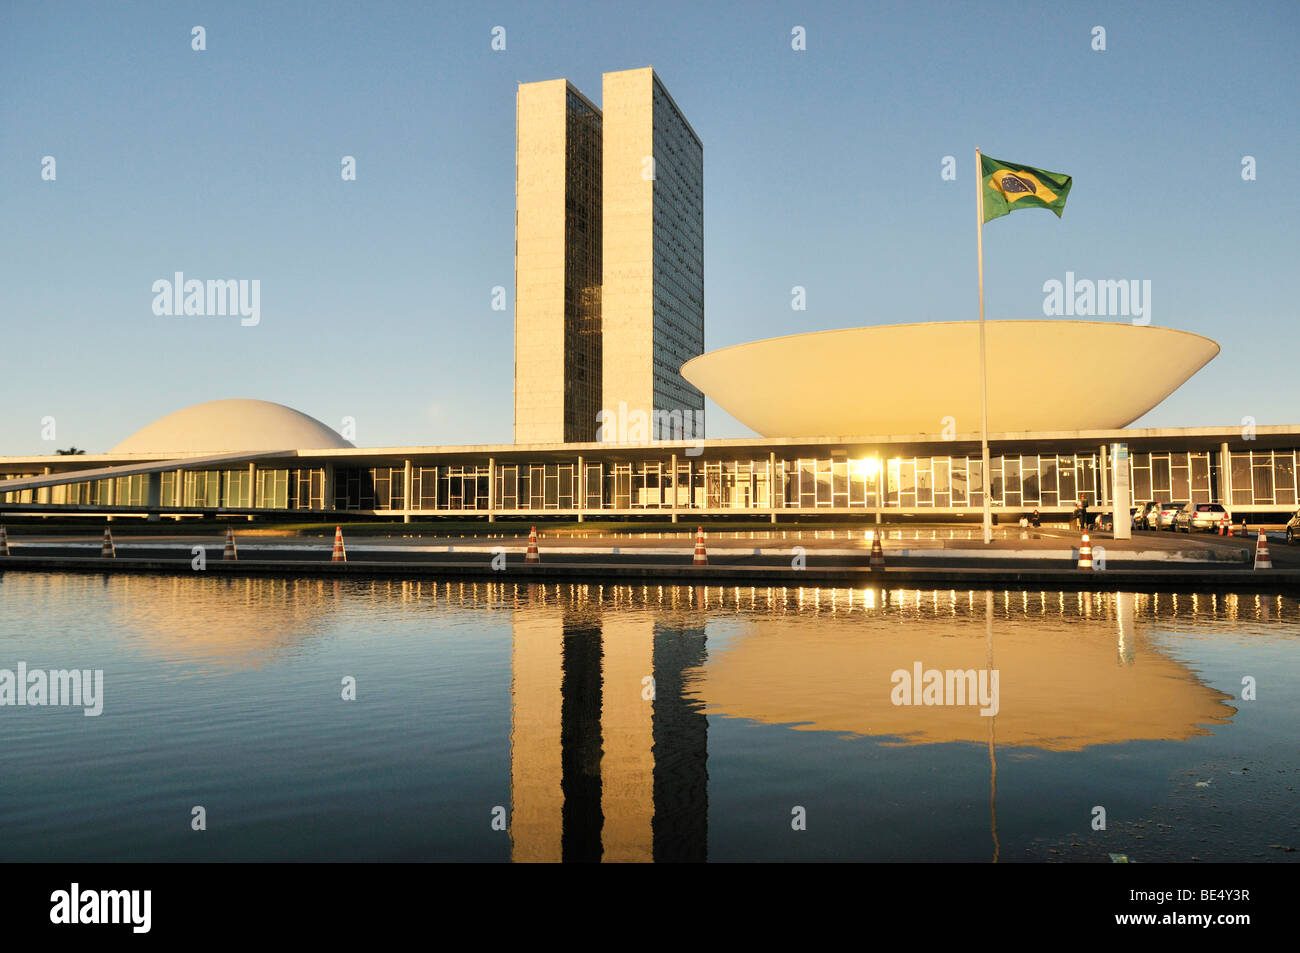 Nacional Congress Congresso building, by architect Oscar Niemeyer, Brasilia, Distrito Federal state, Brazil, South America Stock Photo